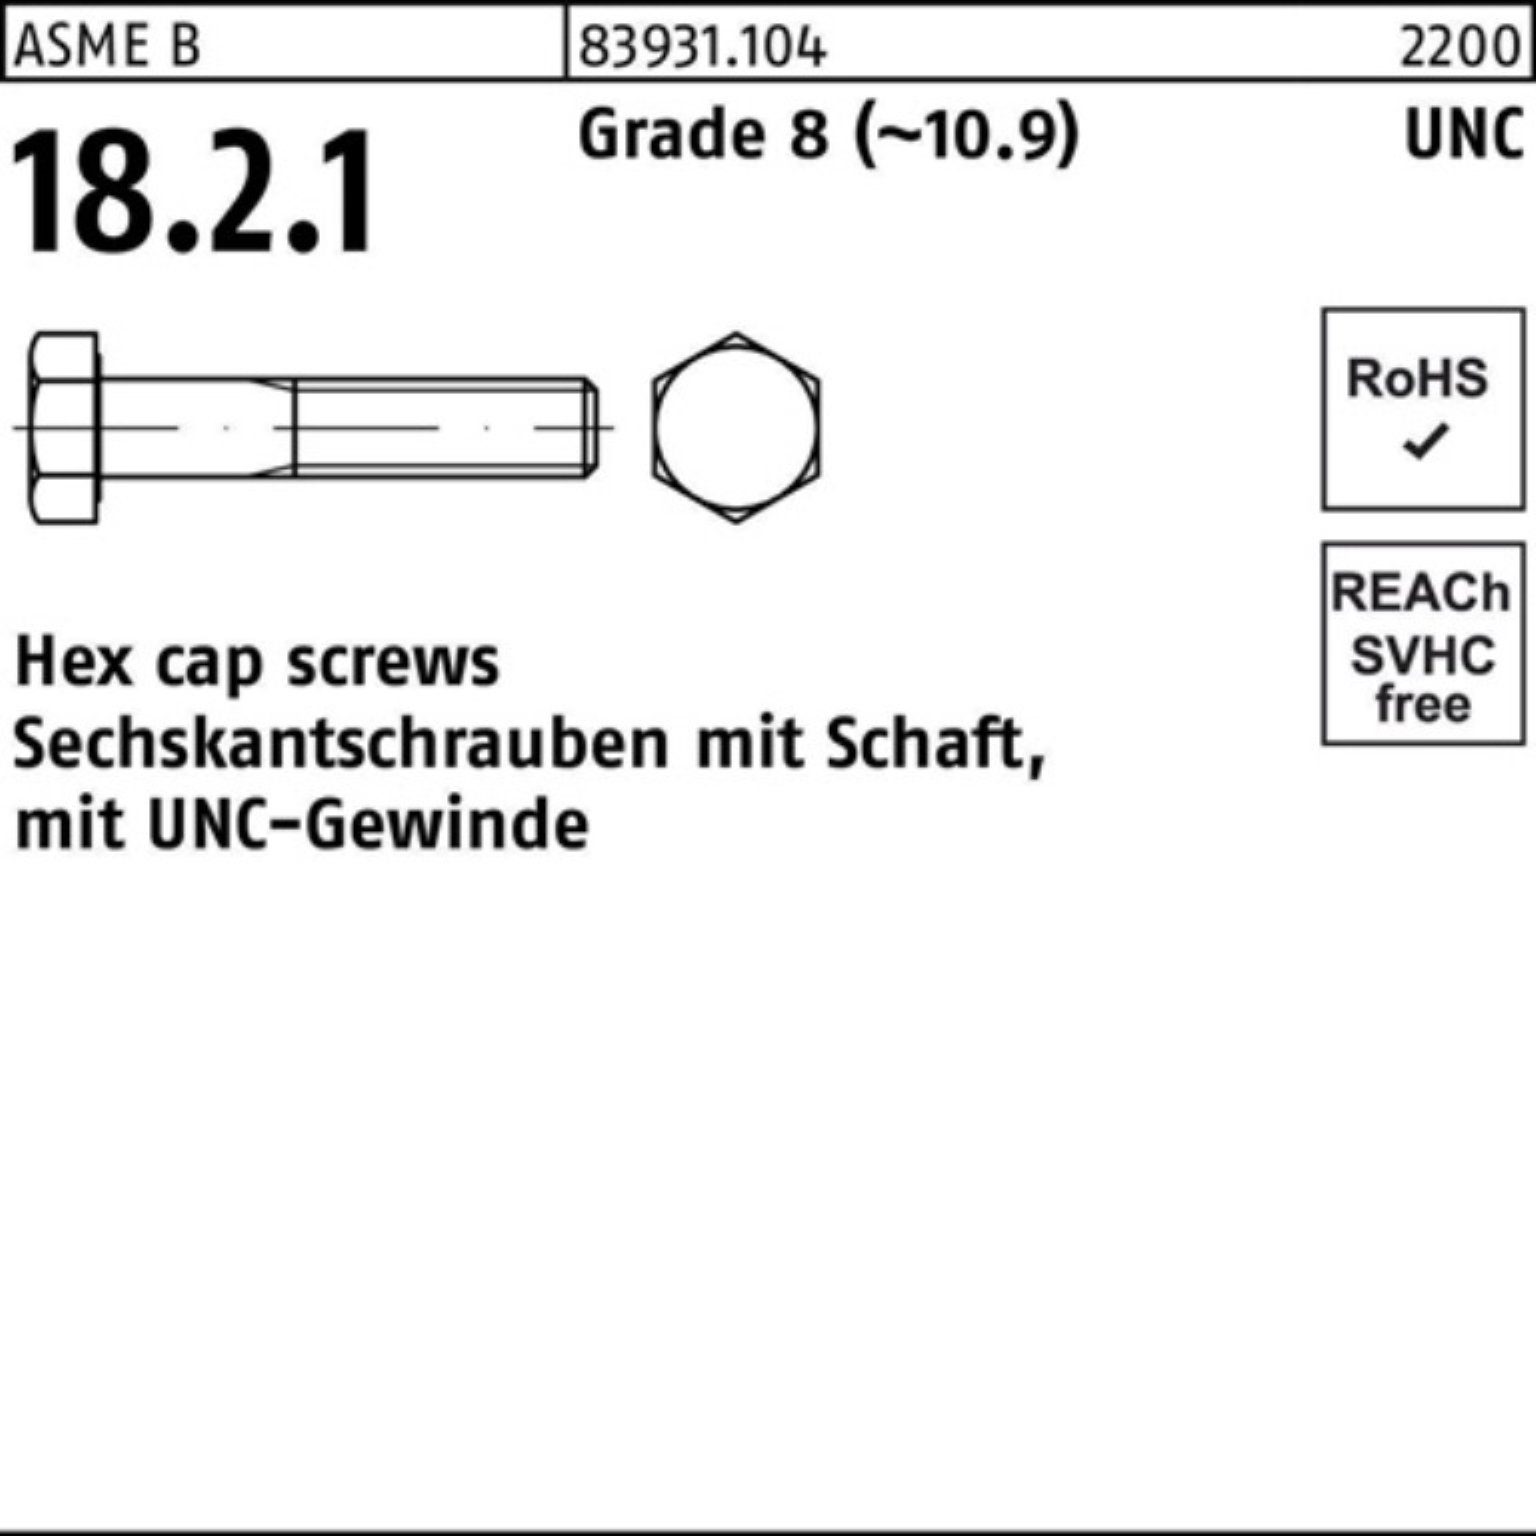 Reyher Sechskantschraube 8 3 100er 1/2x UNC-Gewinde/Schaft Pack Grade Sechskantschraube R 83931